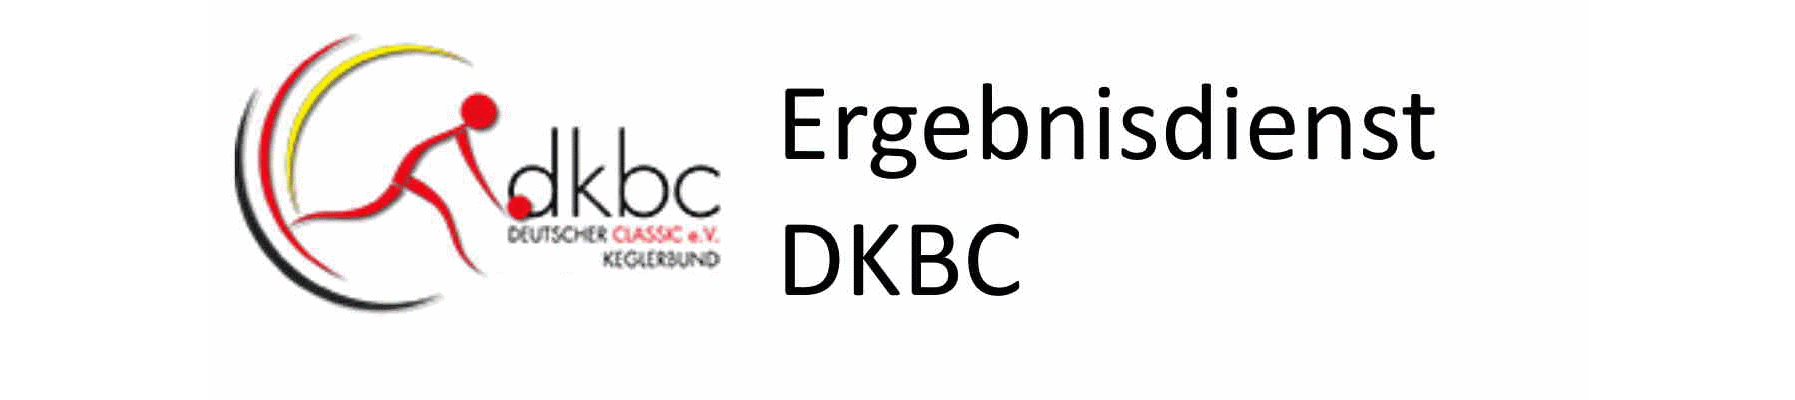 DKBC Ergebnisportal